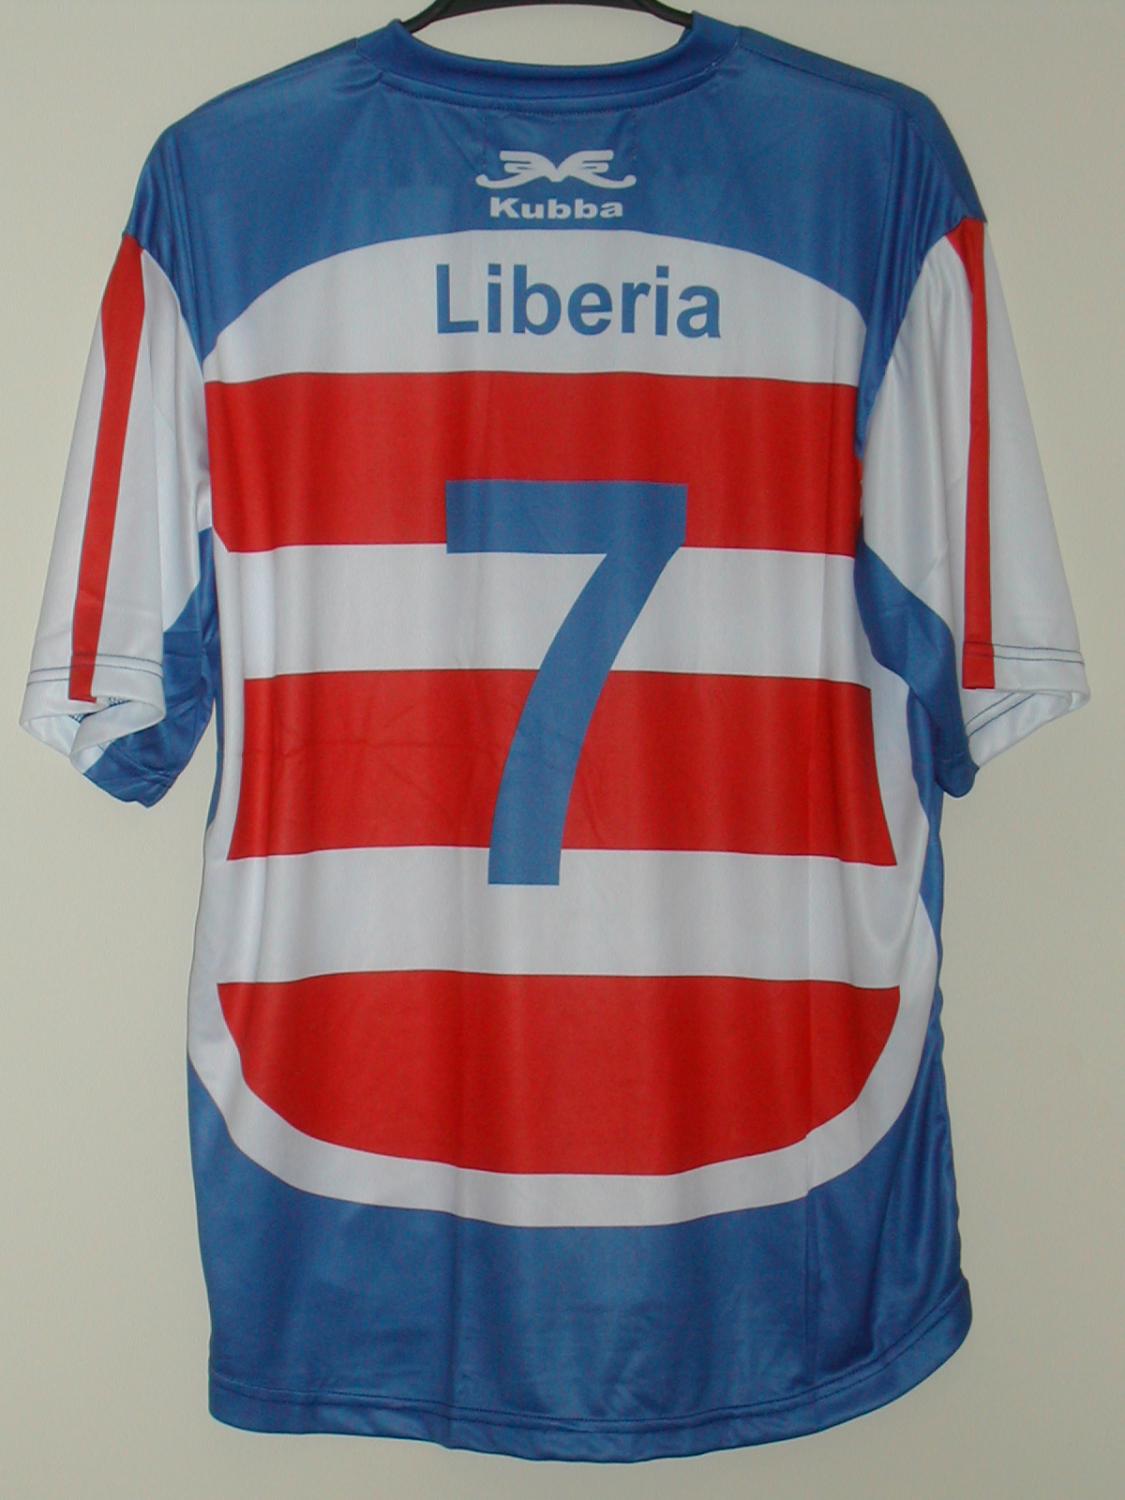 maillot liberia domicile 2009 rétro